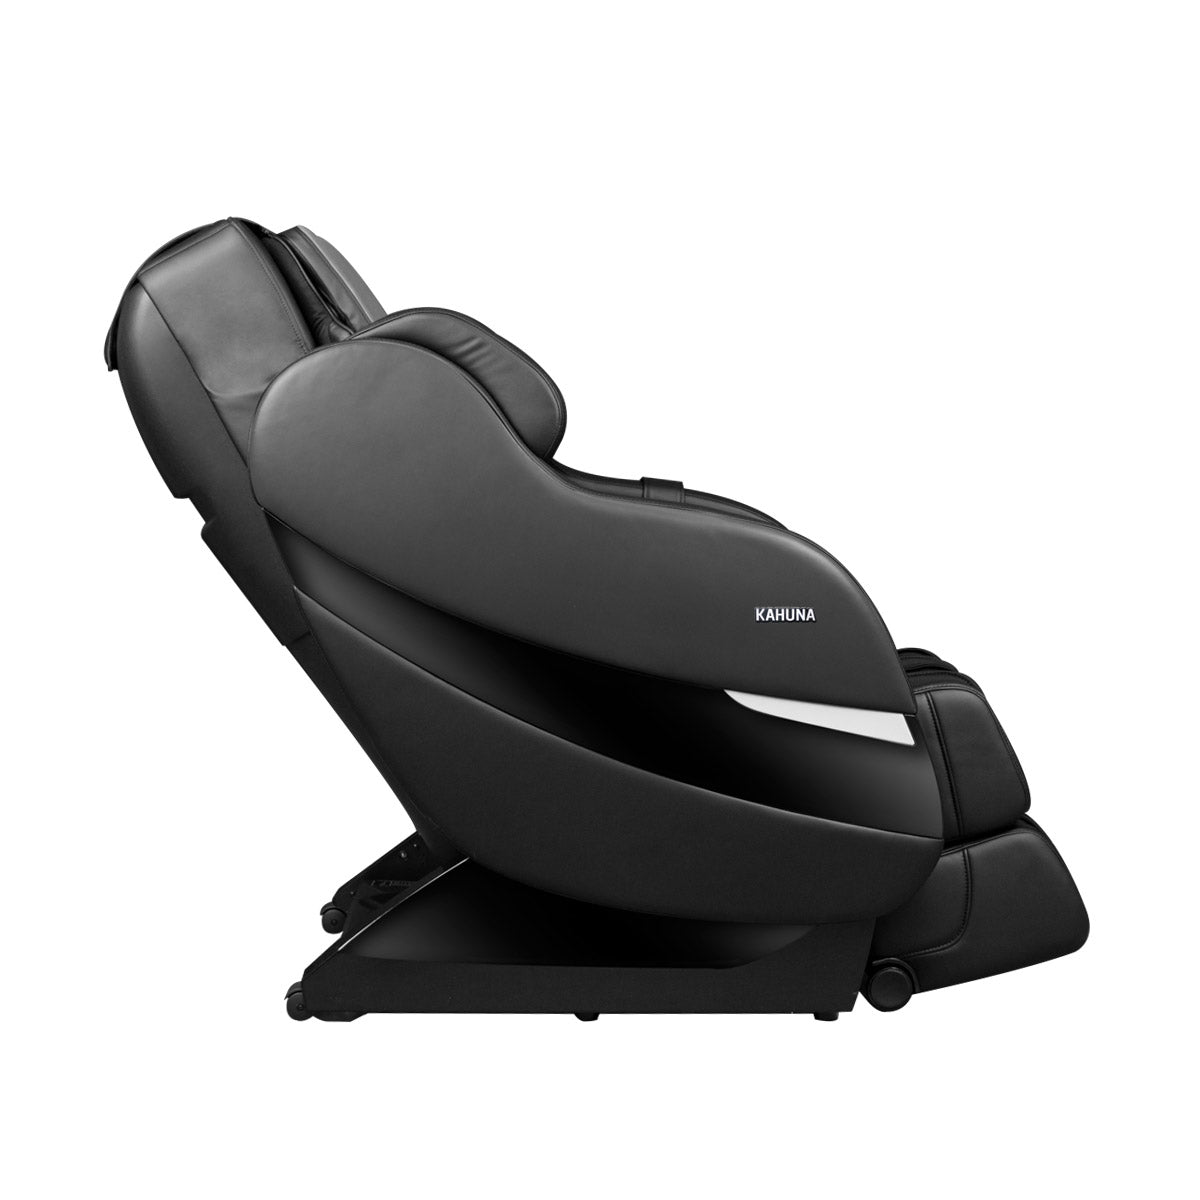 Kahuna SM-7300 Massage Chair Black Right Side